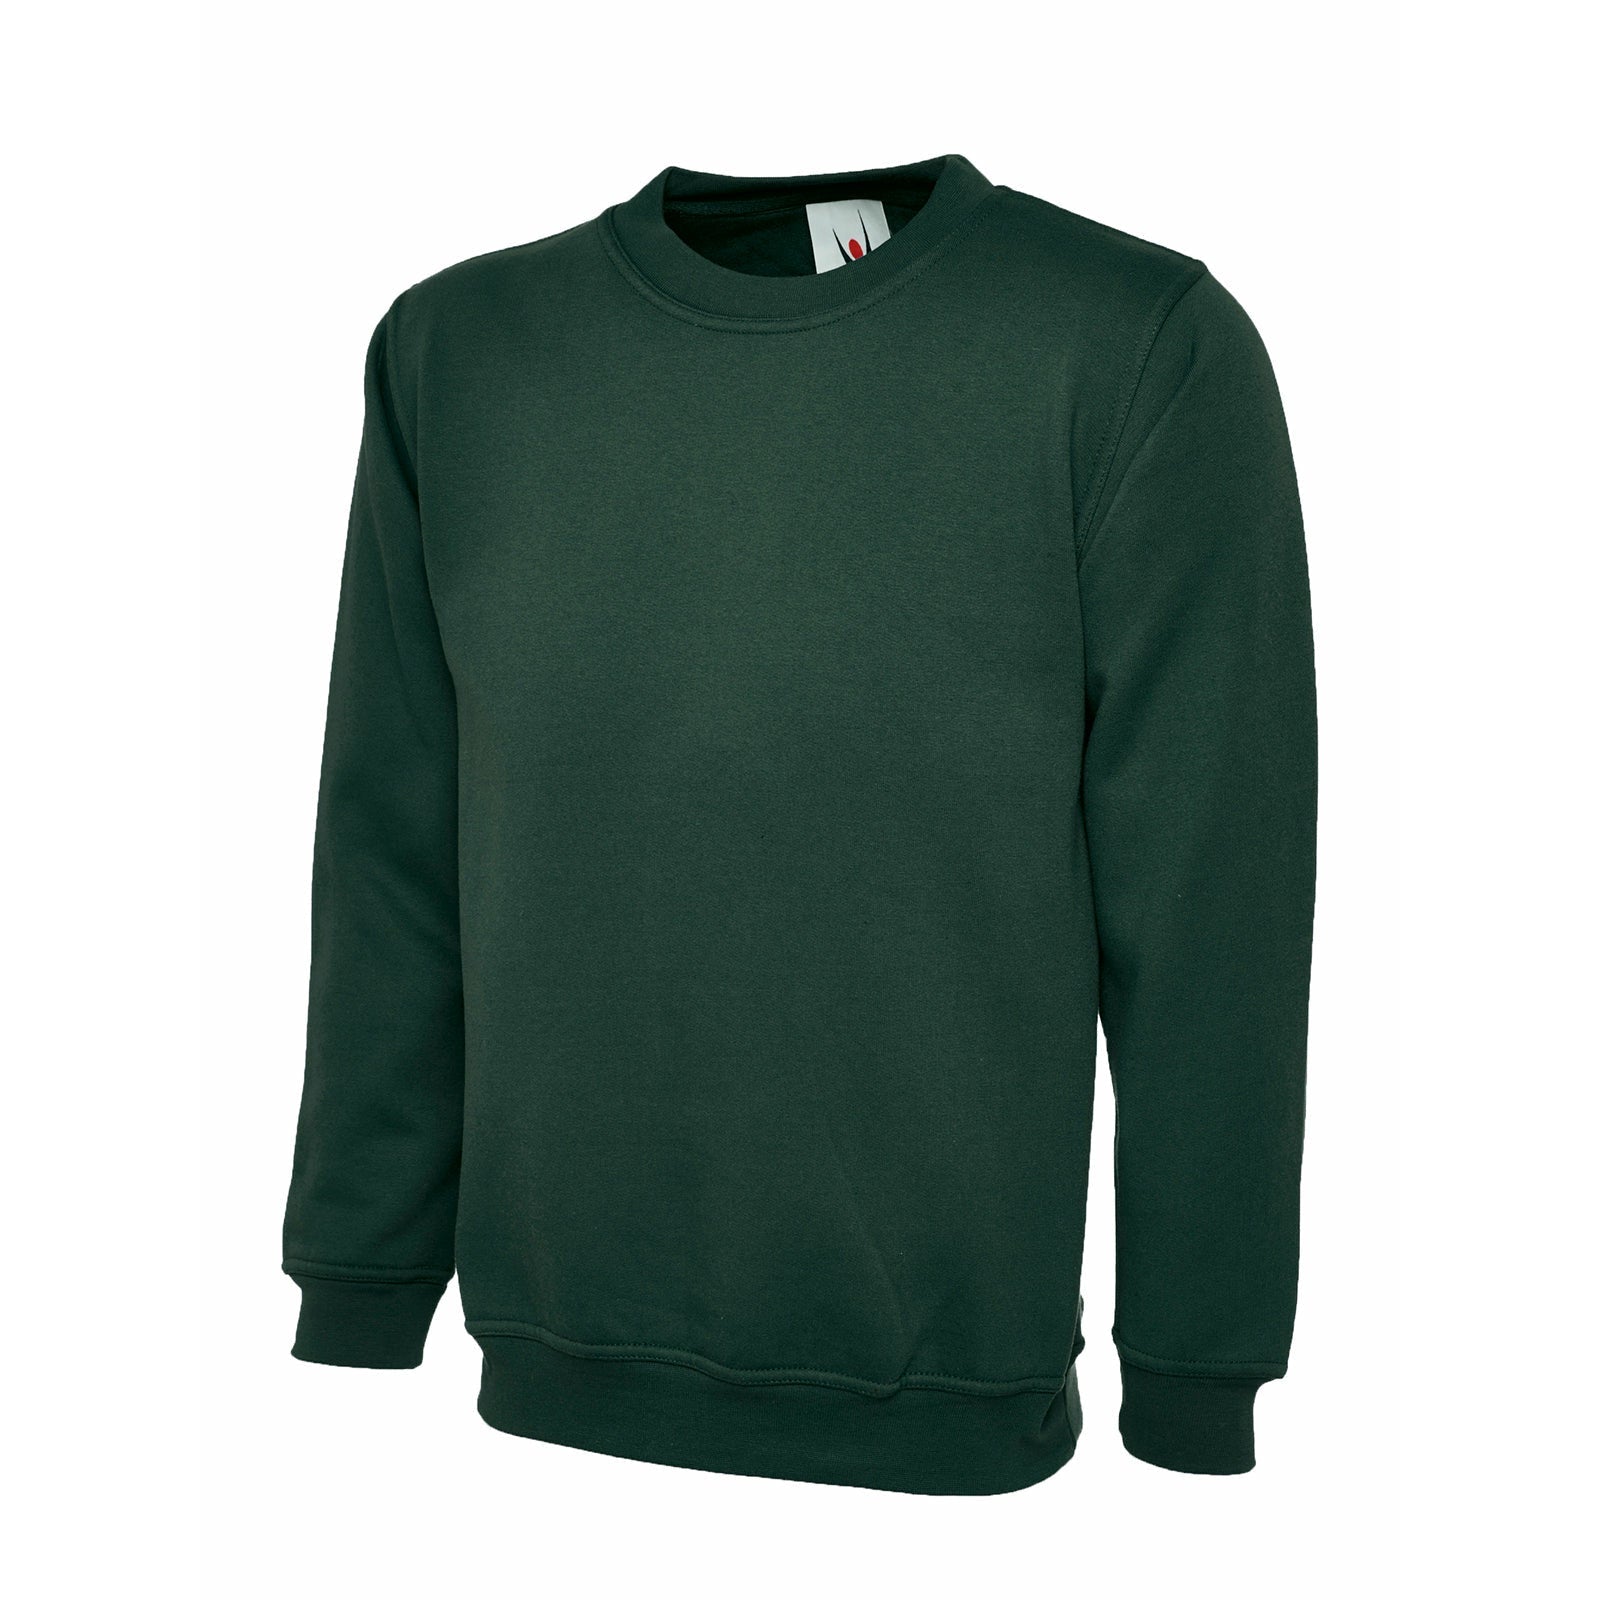 Green crewneck sweatshirt